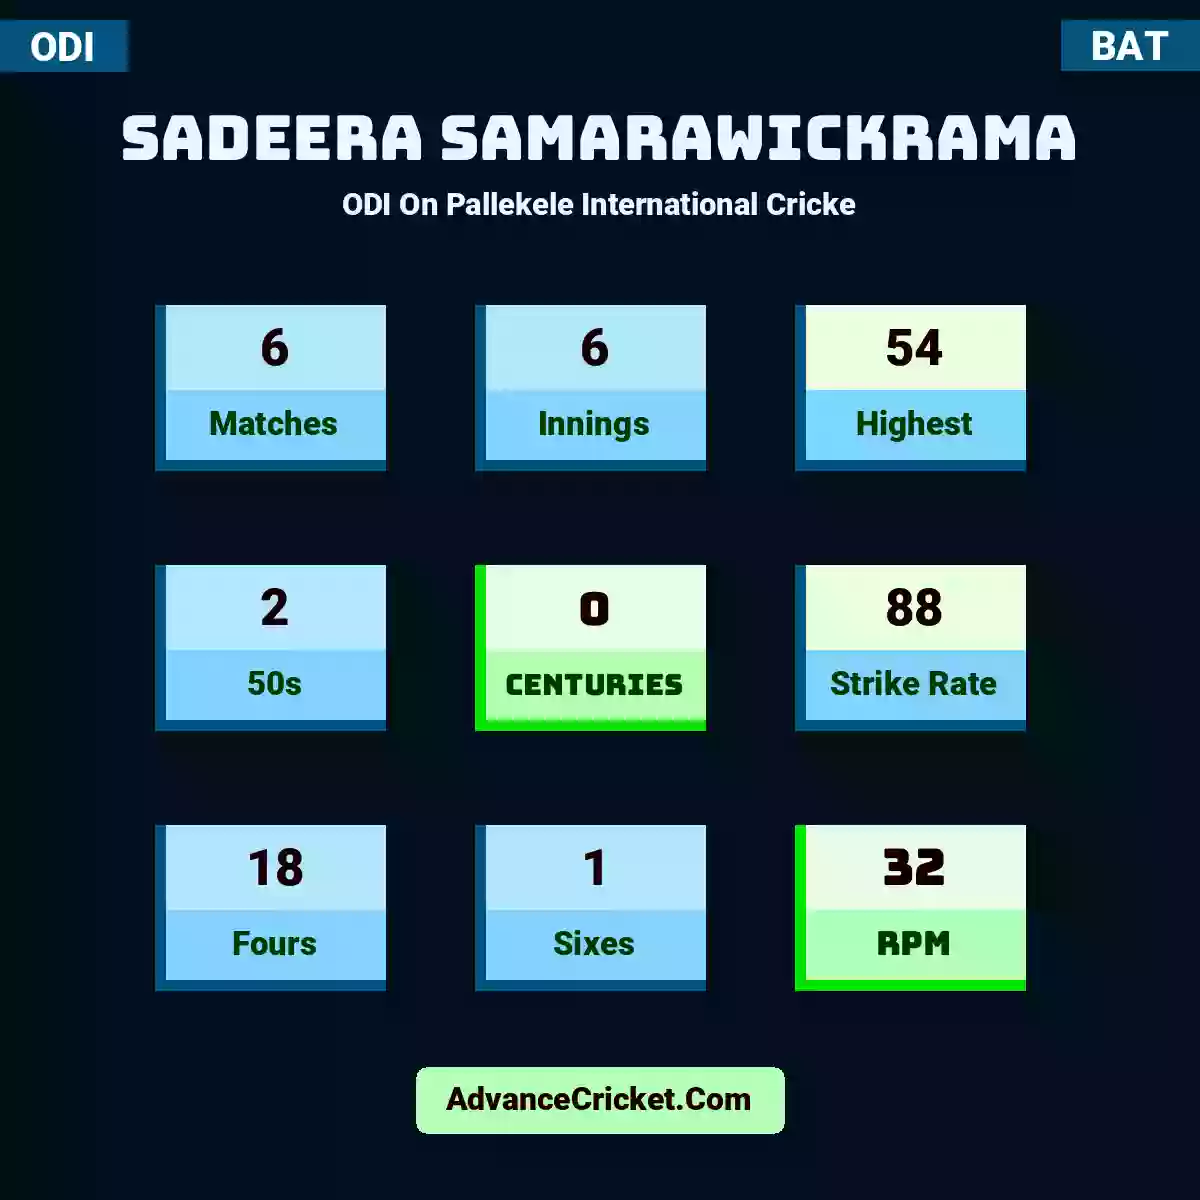 Sadeera Samarawickrama ODI  On Pallekele International Cricke, Sadeera Samarawickrama played 6 matches, scored 54 runs as highest, 2 half-centuries, and 0 centuries, with a strike rate of 88. S.Samarawickrama hit 18 fours and 1 sixes, with an RPM of 32.